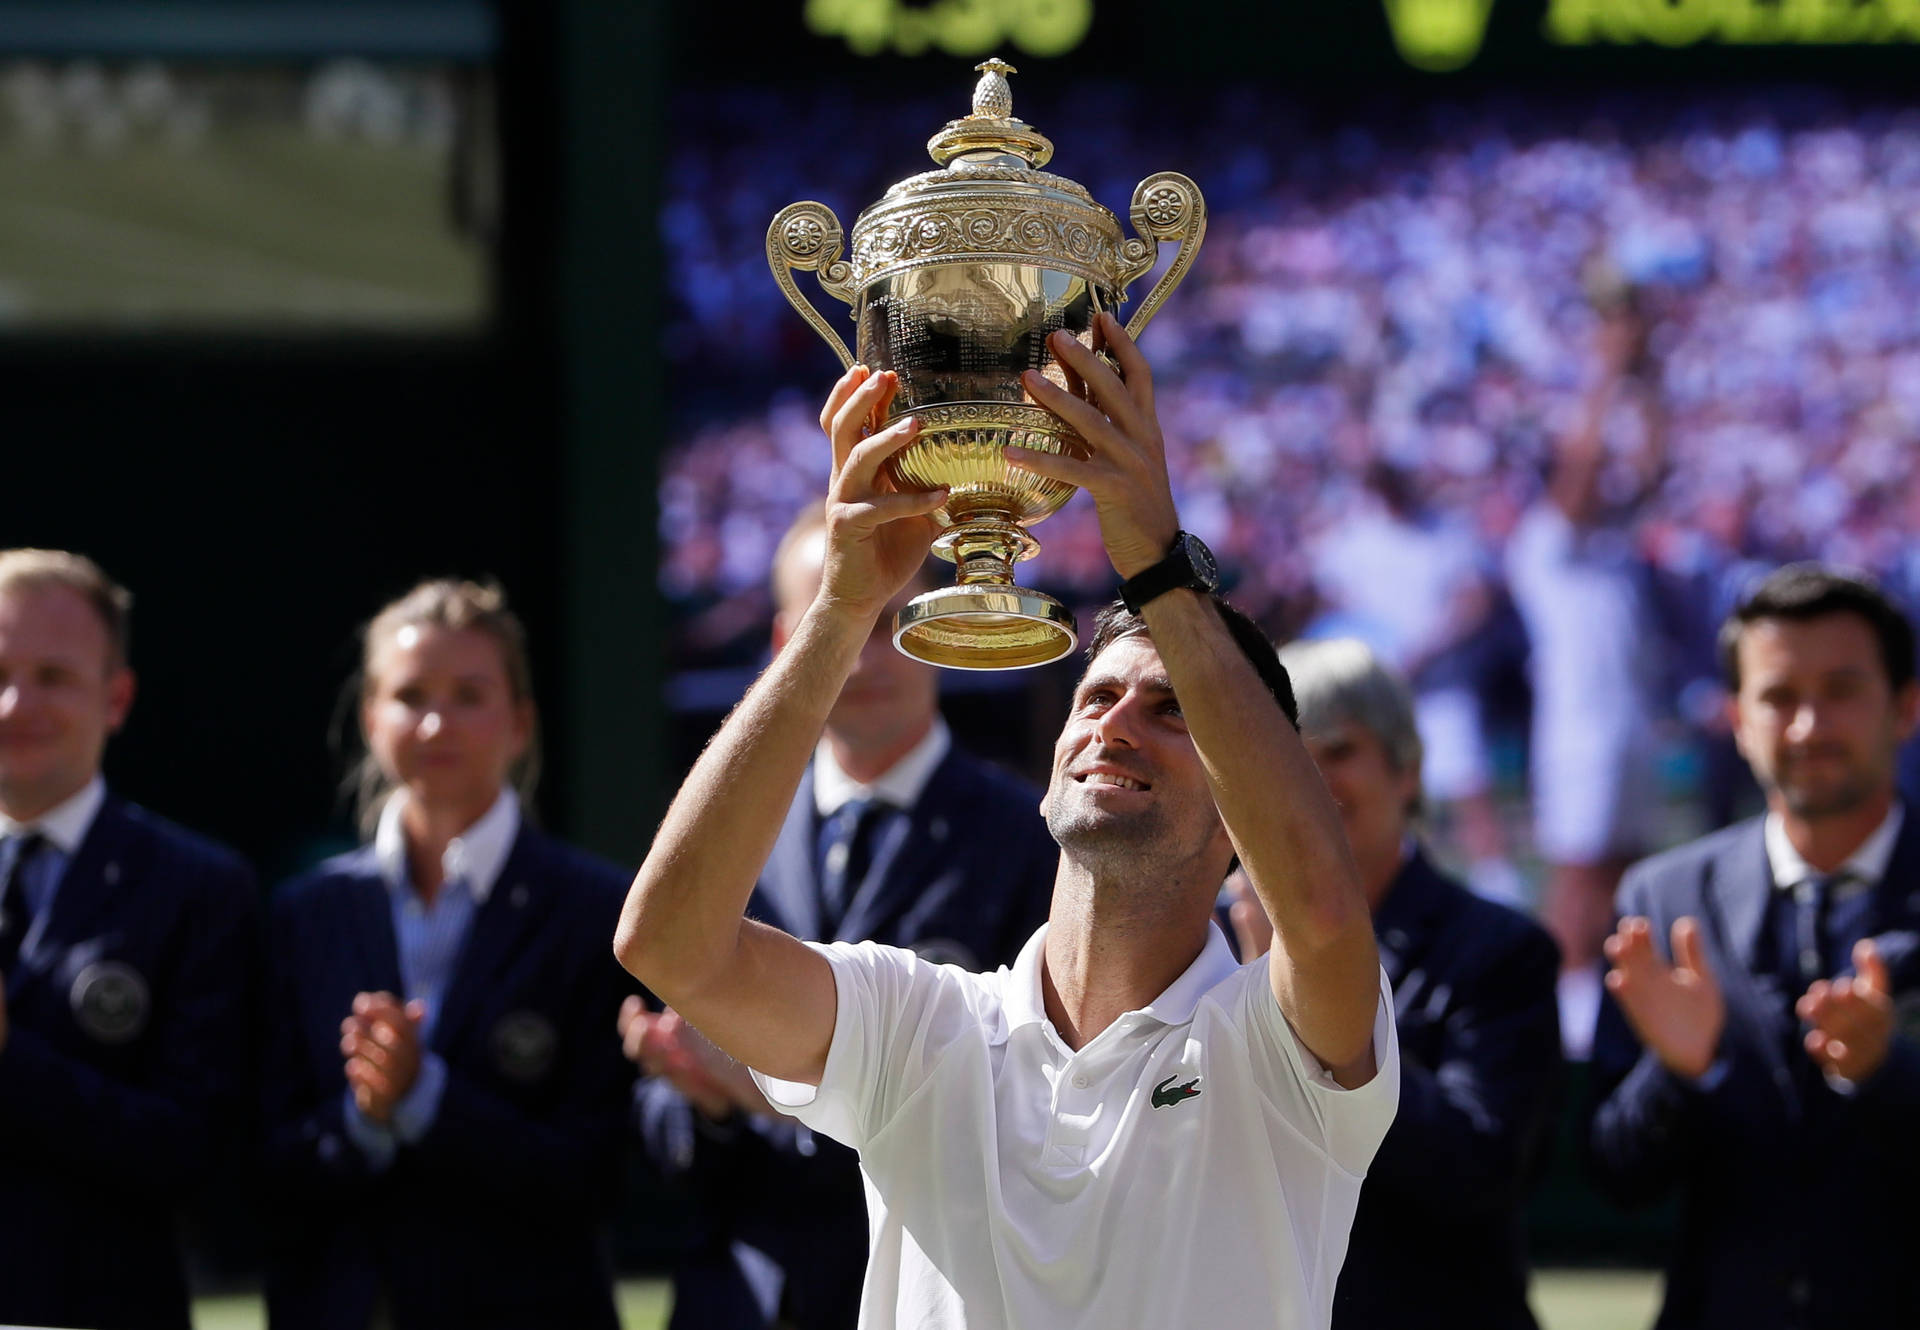 Novak Djokovic 2018 Wimbledon Men's Winner Picture